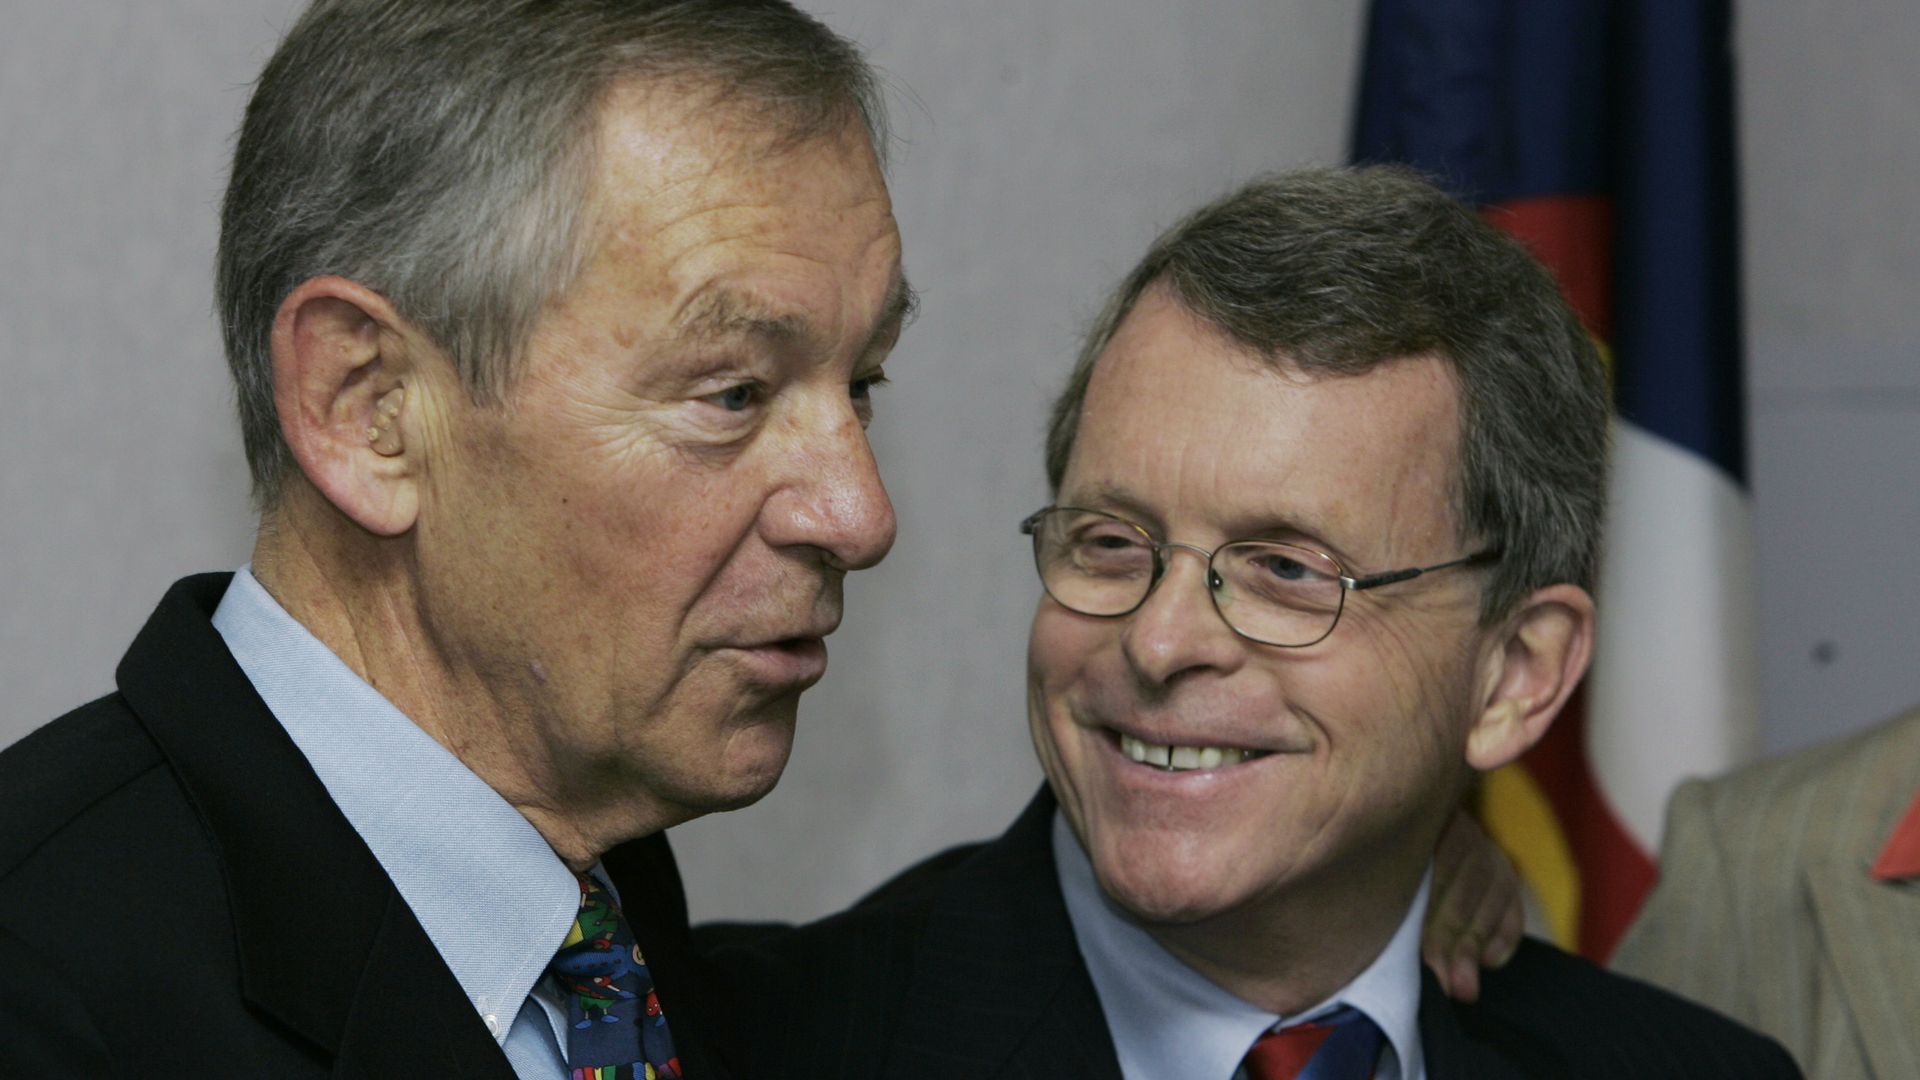 Ohio politicians George Voinovich and Mike DeWine